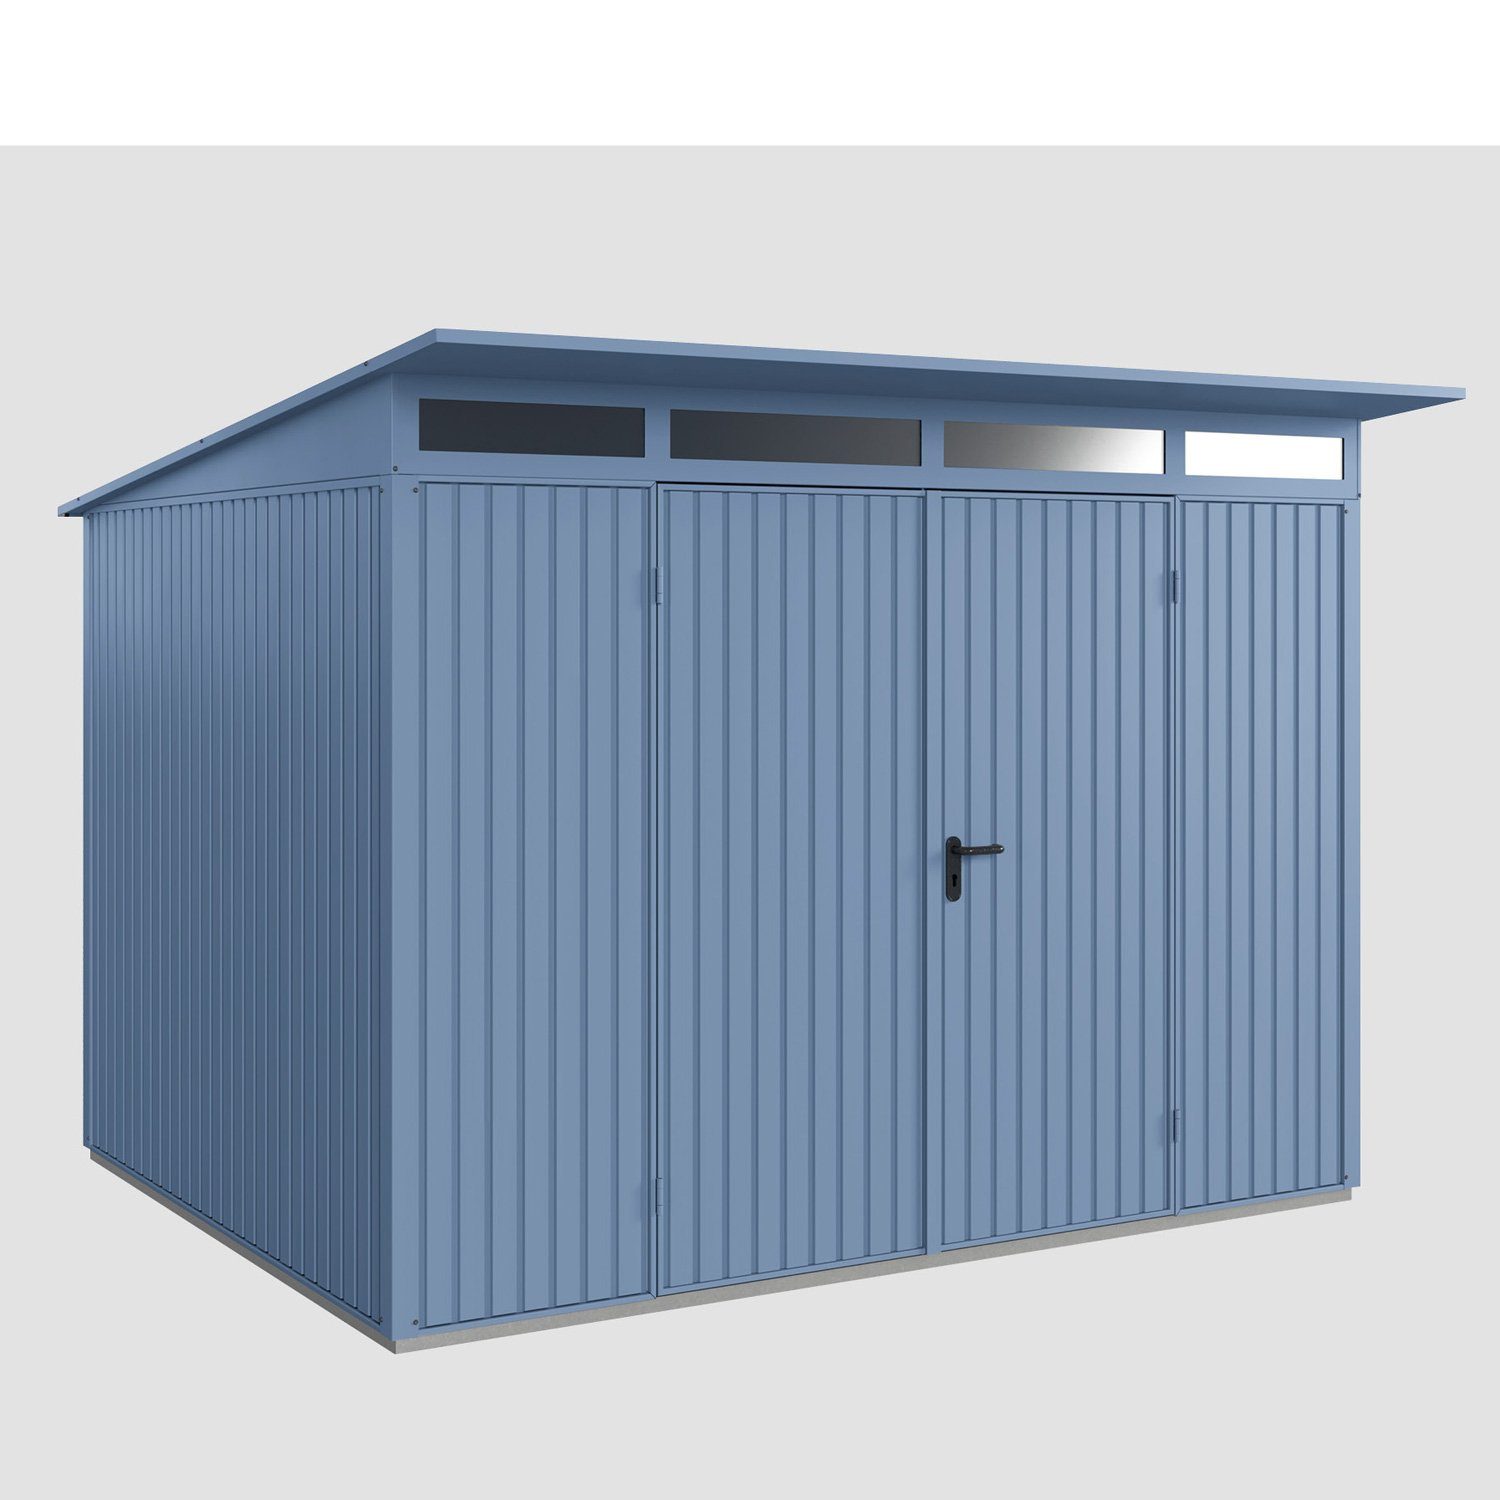 Hörmann Ecostar Gerätehaus Metall-Gerätehaus Trend mit Pultdach Typ 3, 2-flüglige Tür taubenblau